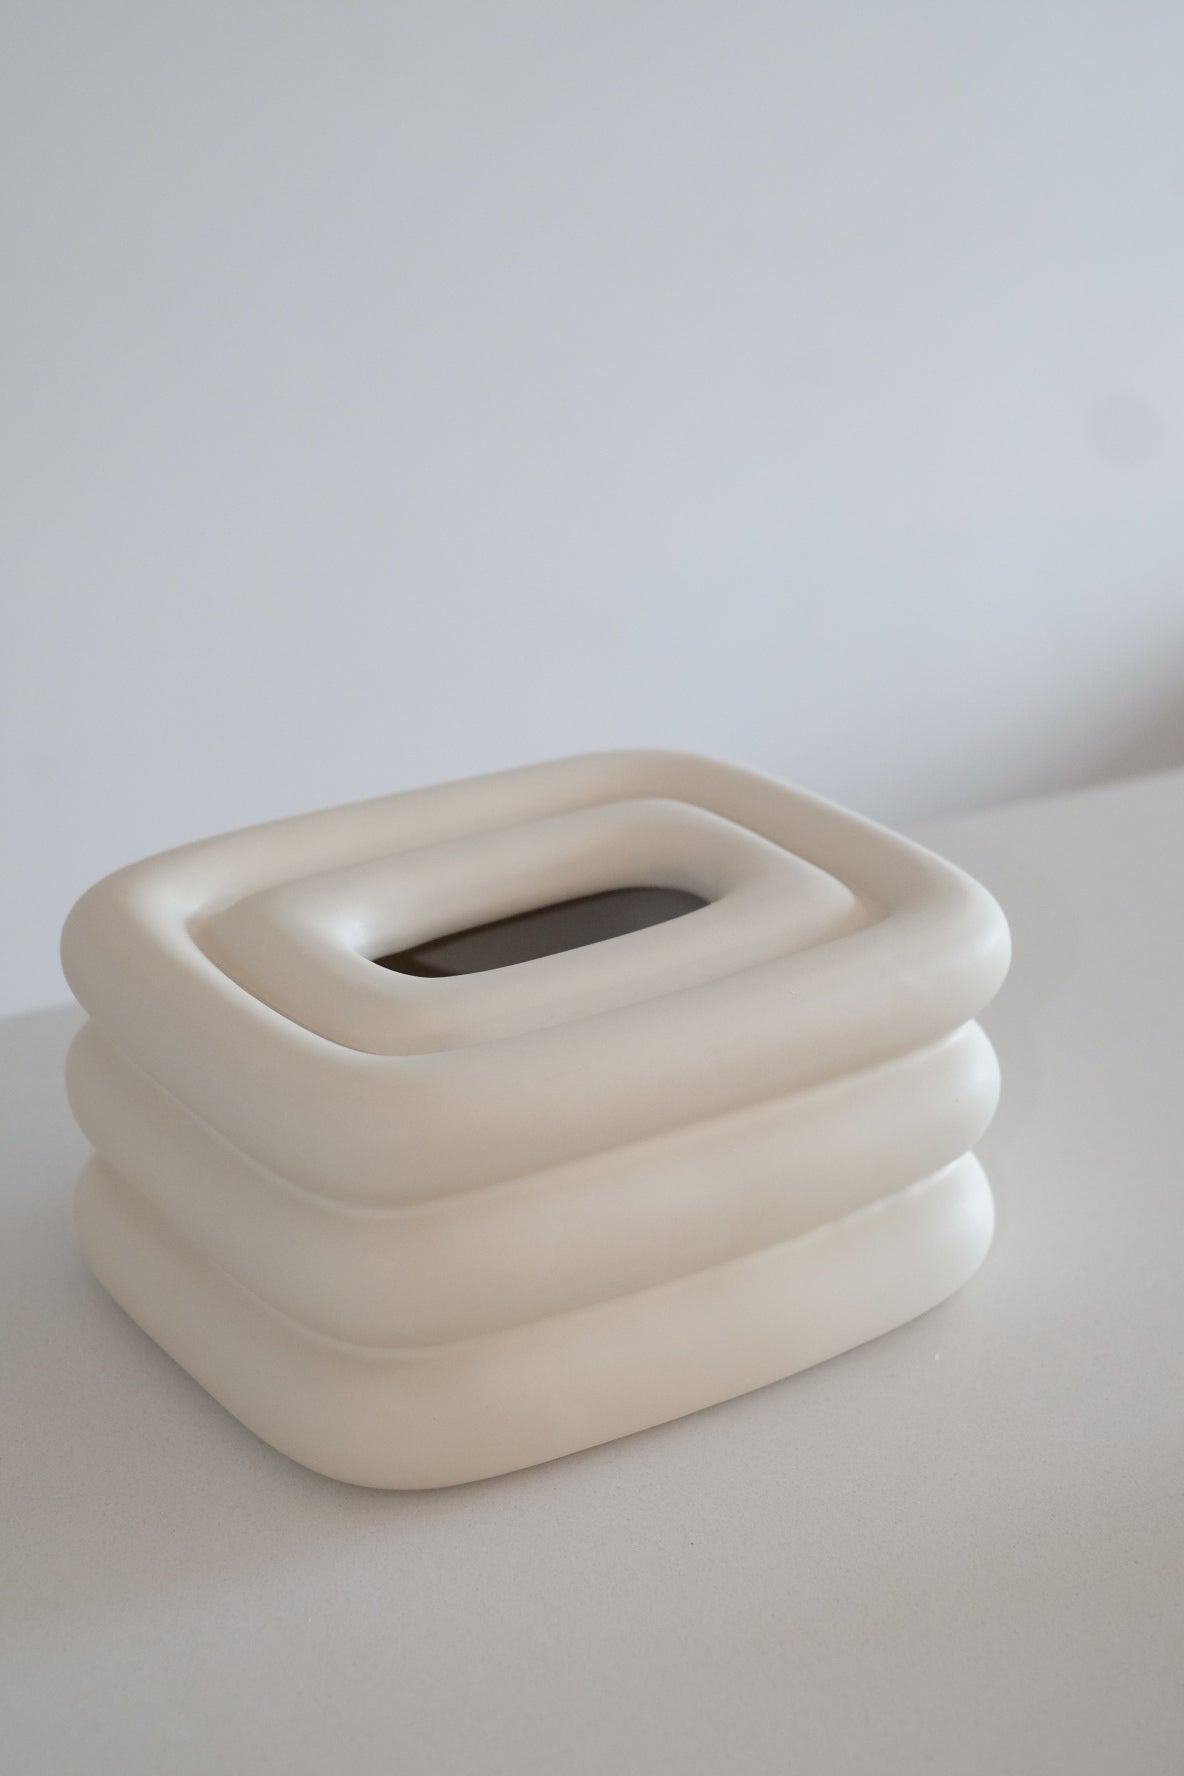 Nami Ceramic Tissue Box